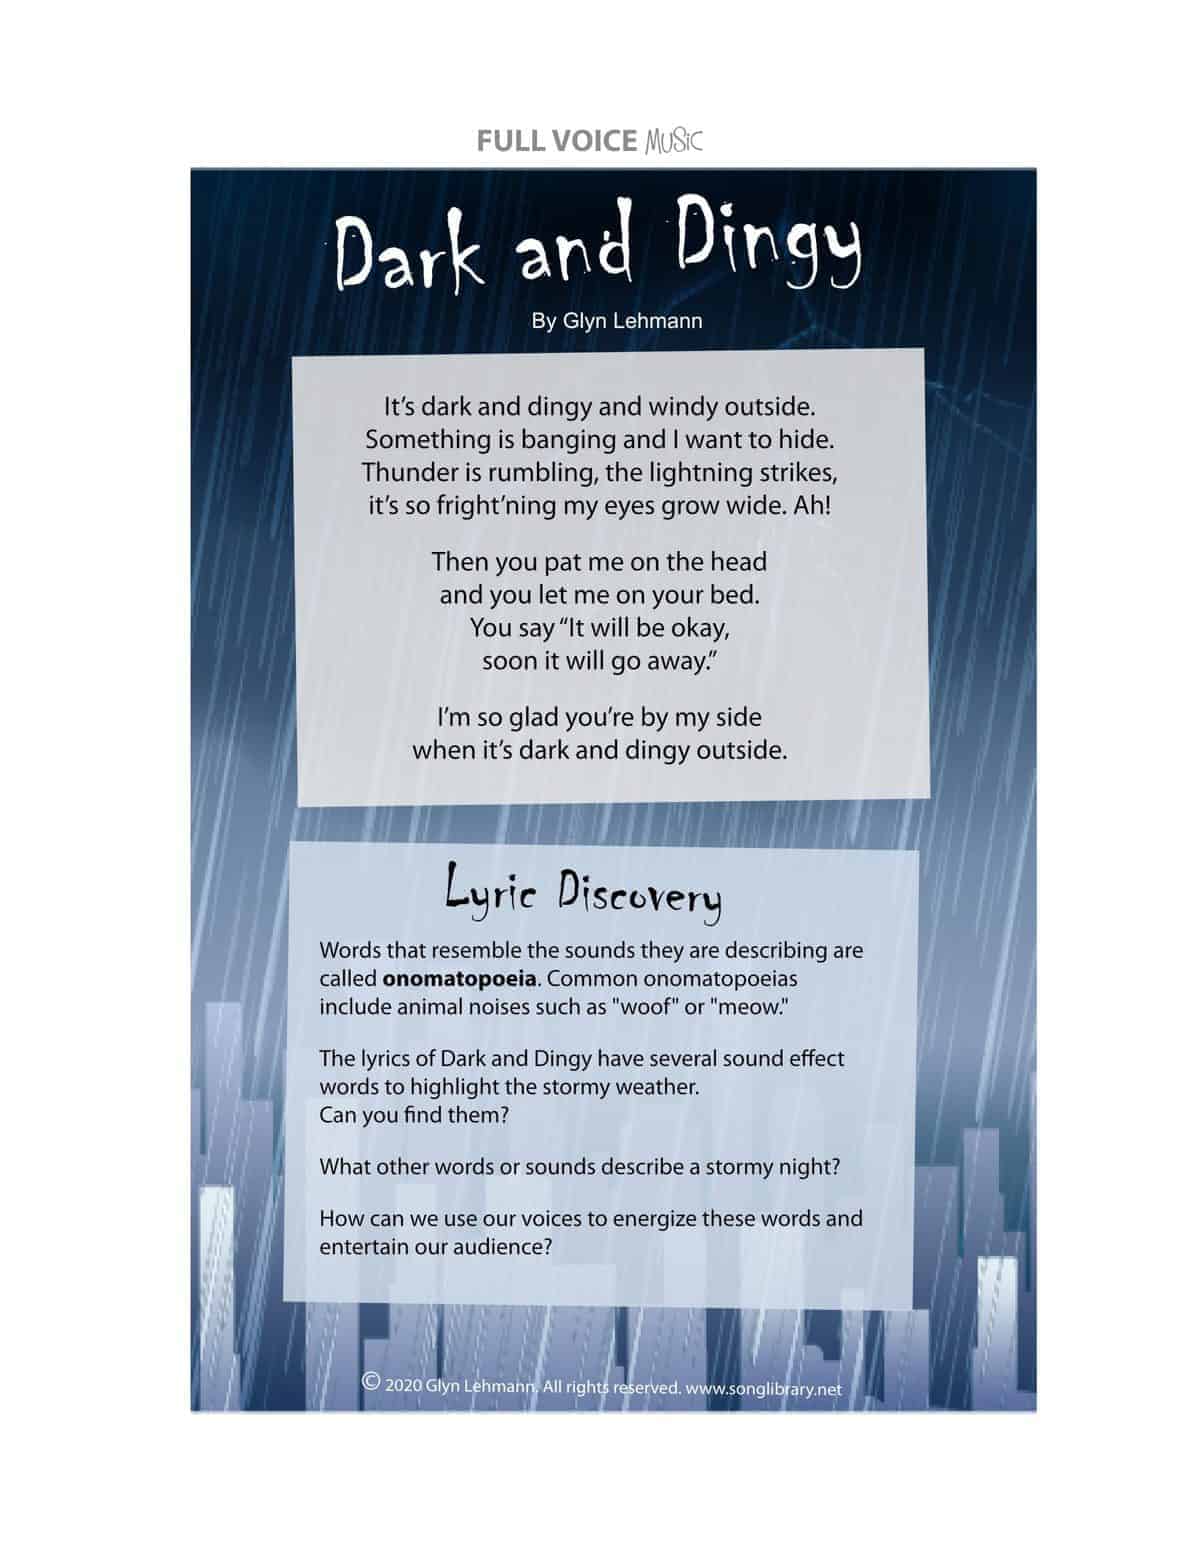 Dark and Dingy by Glyn Lehmann